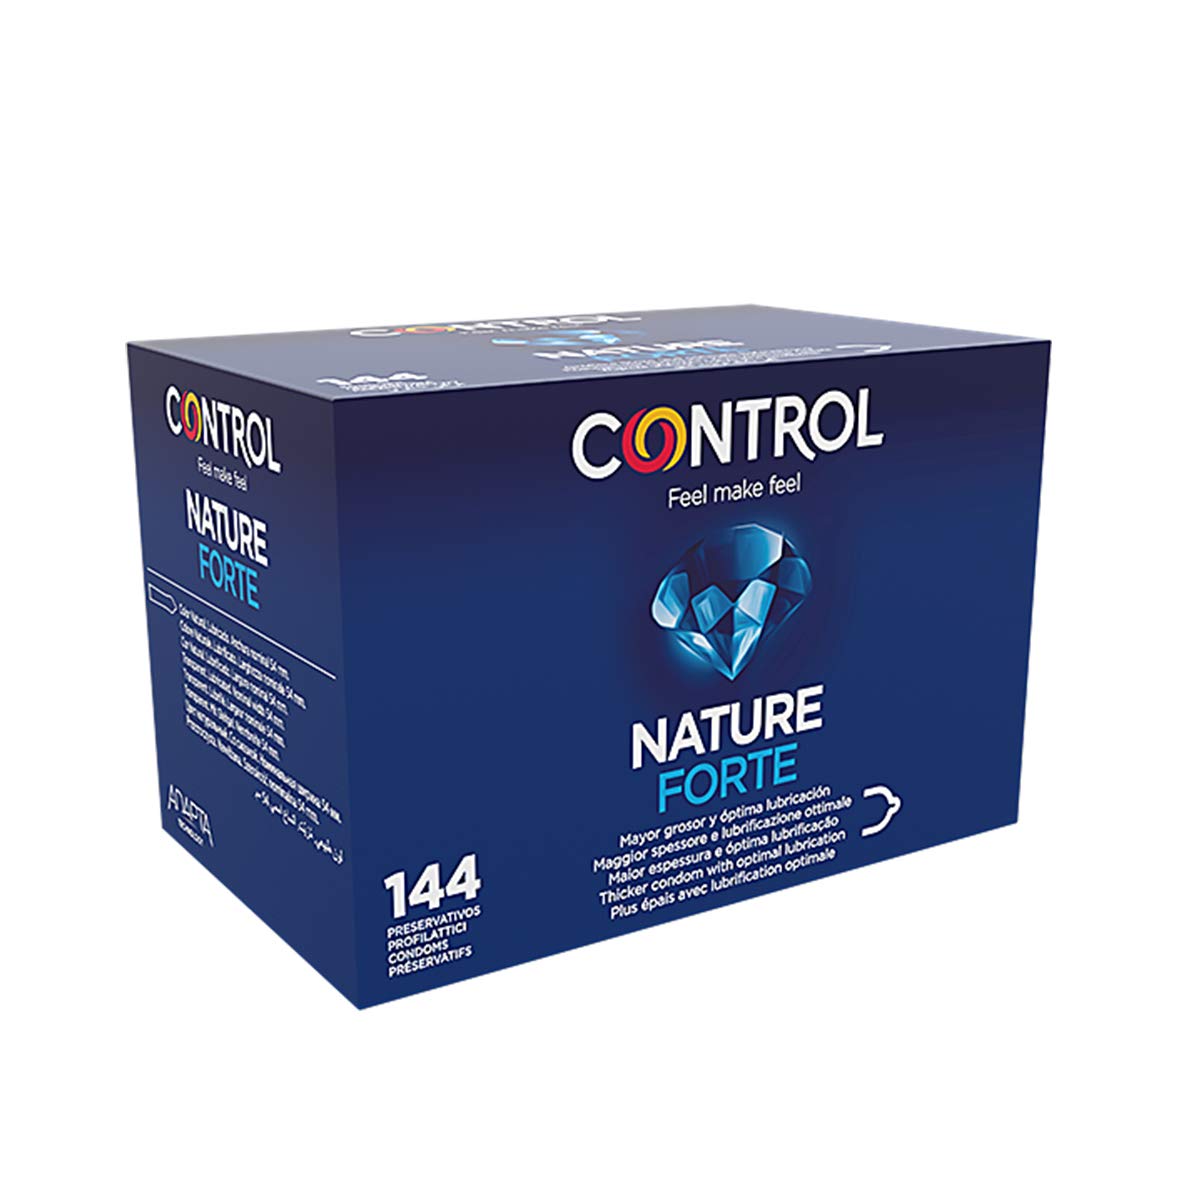 CONTROL NATURE FORTE Ergonomische Kondome aus Naturlatex extra stark - 144 Stück